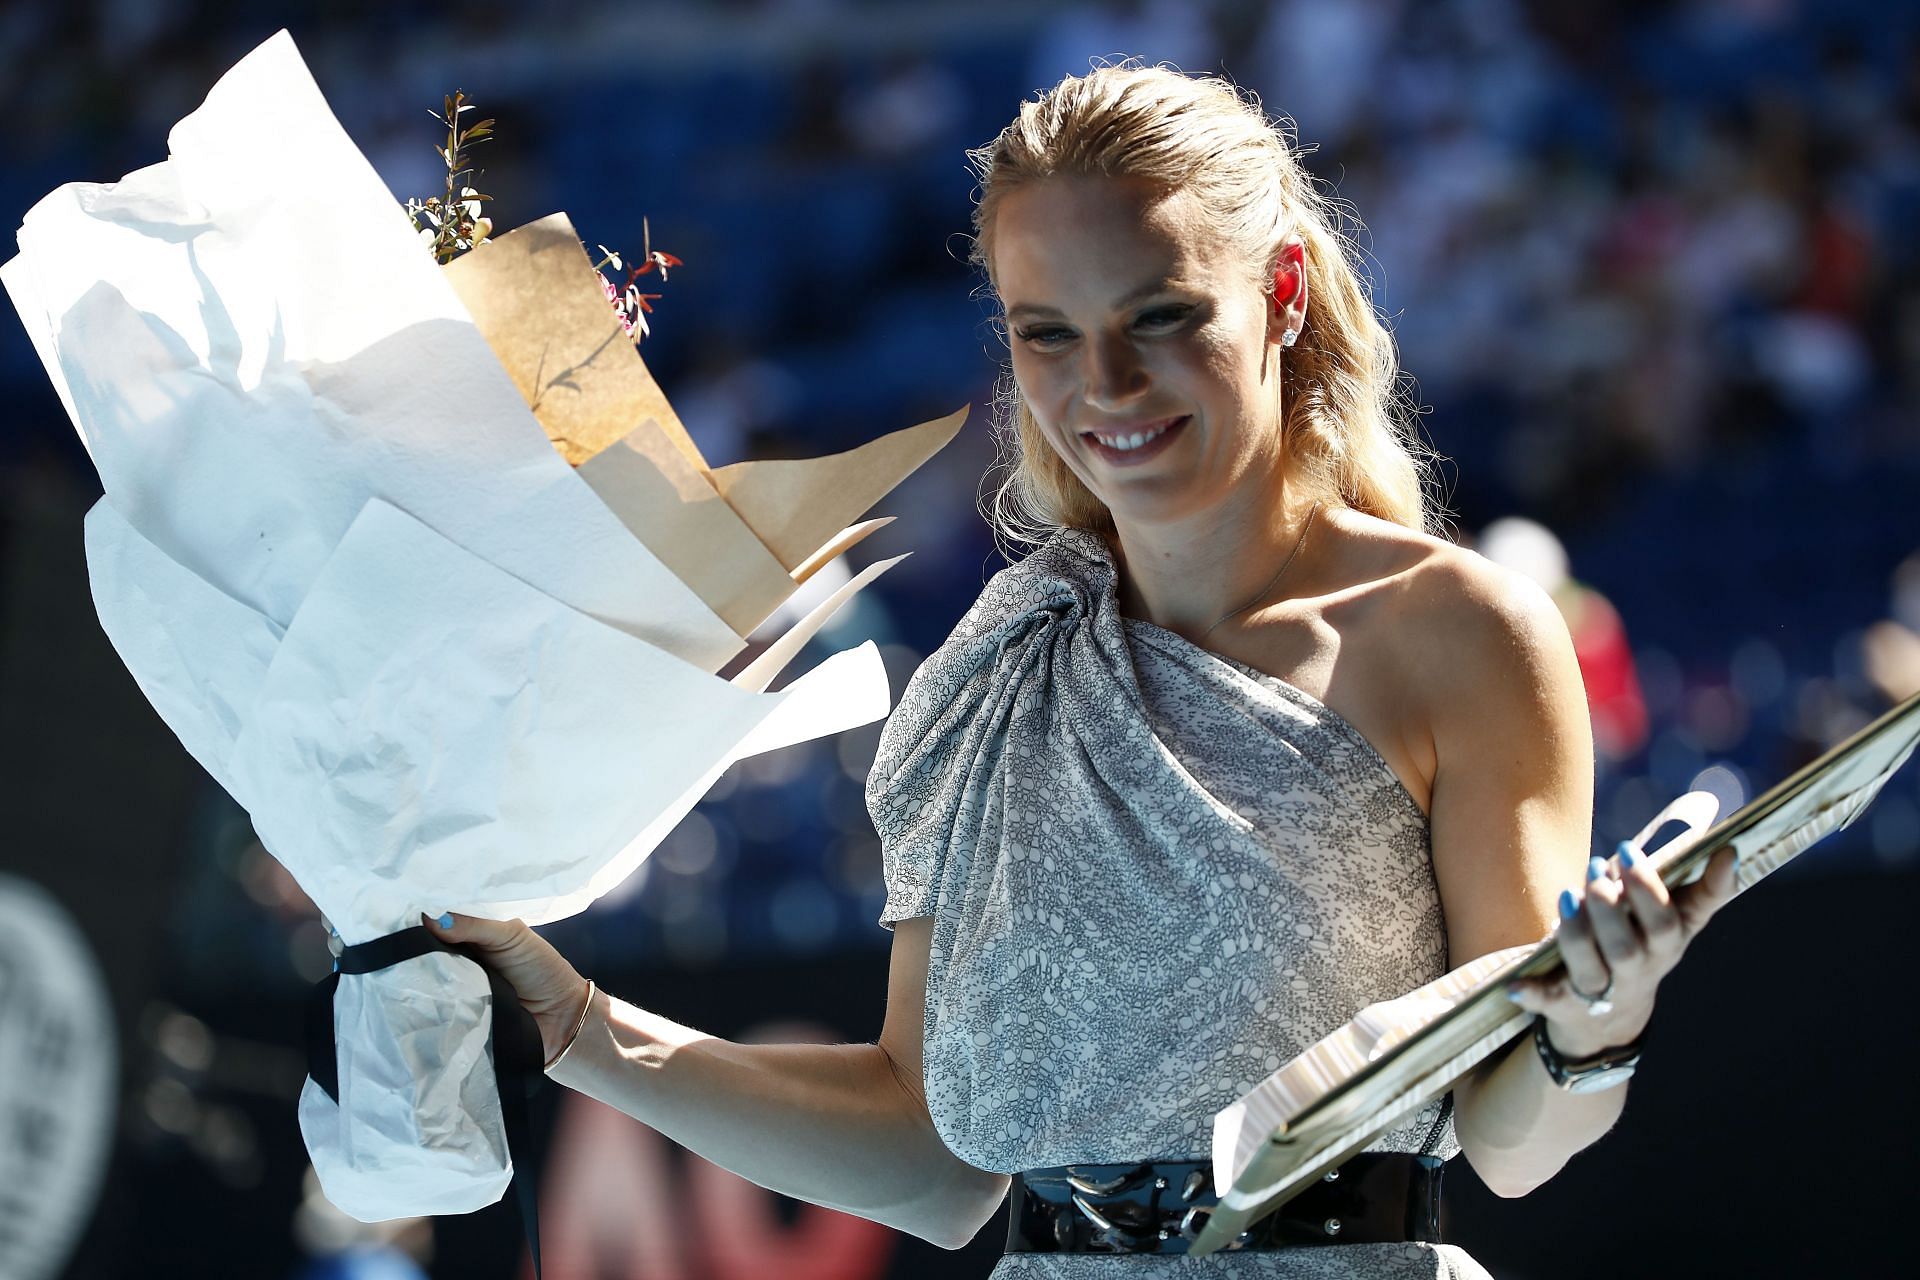 Caroline Wozniacki at the 2020 Australian Open